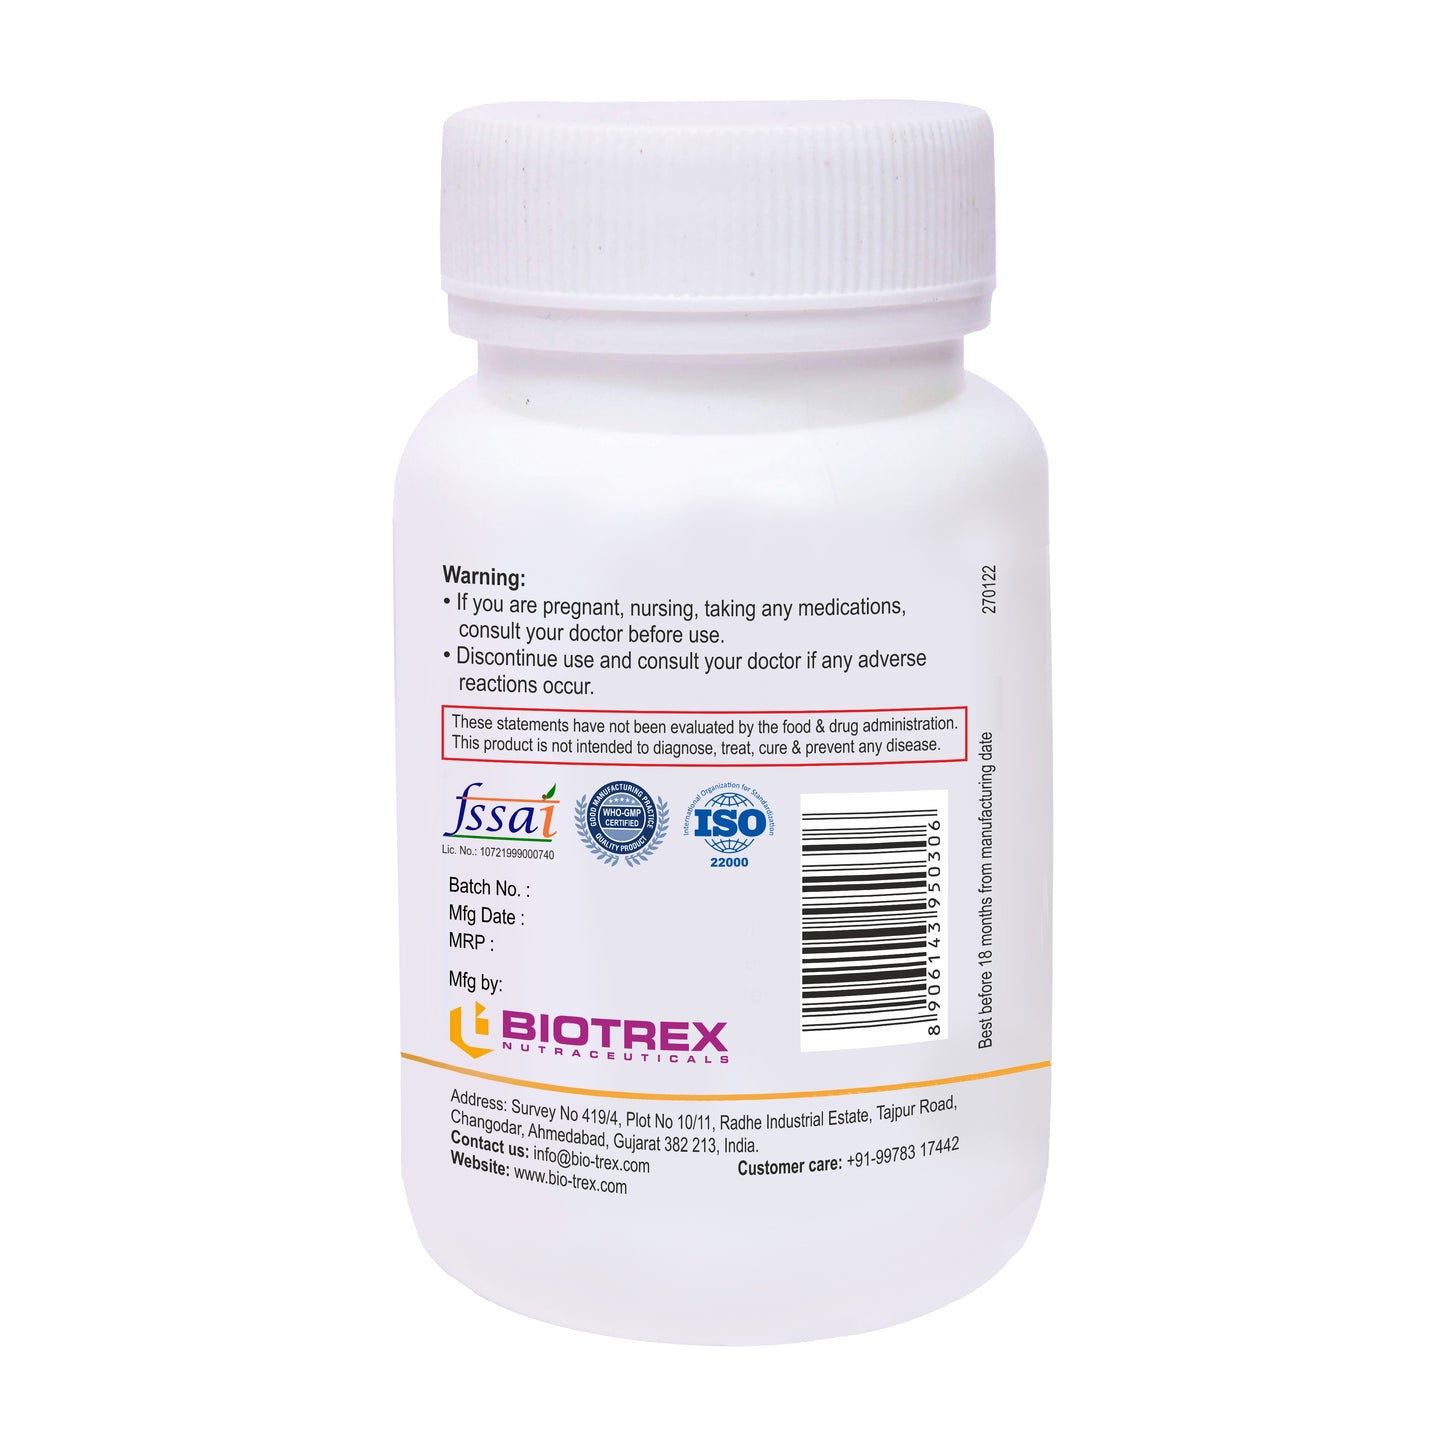 Biotrex Cat's Claw 500 mg - 60 Capsules